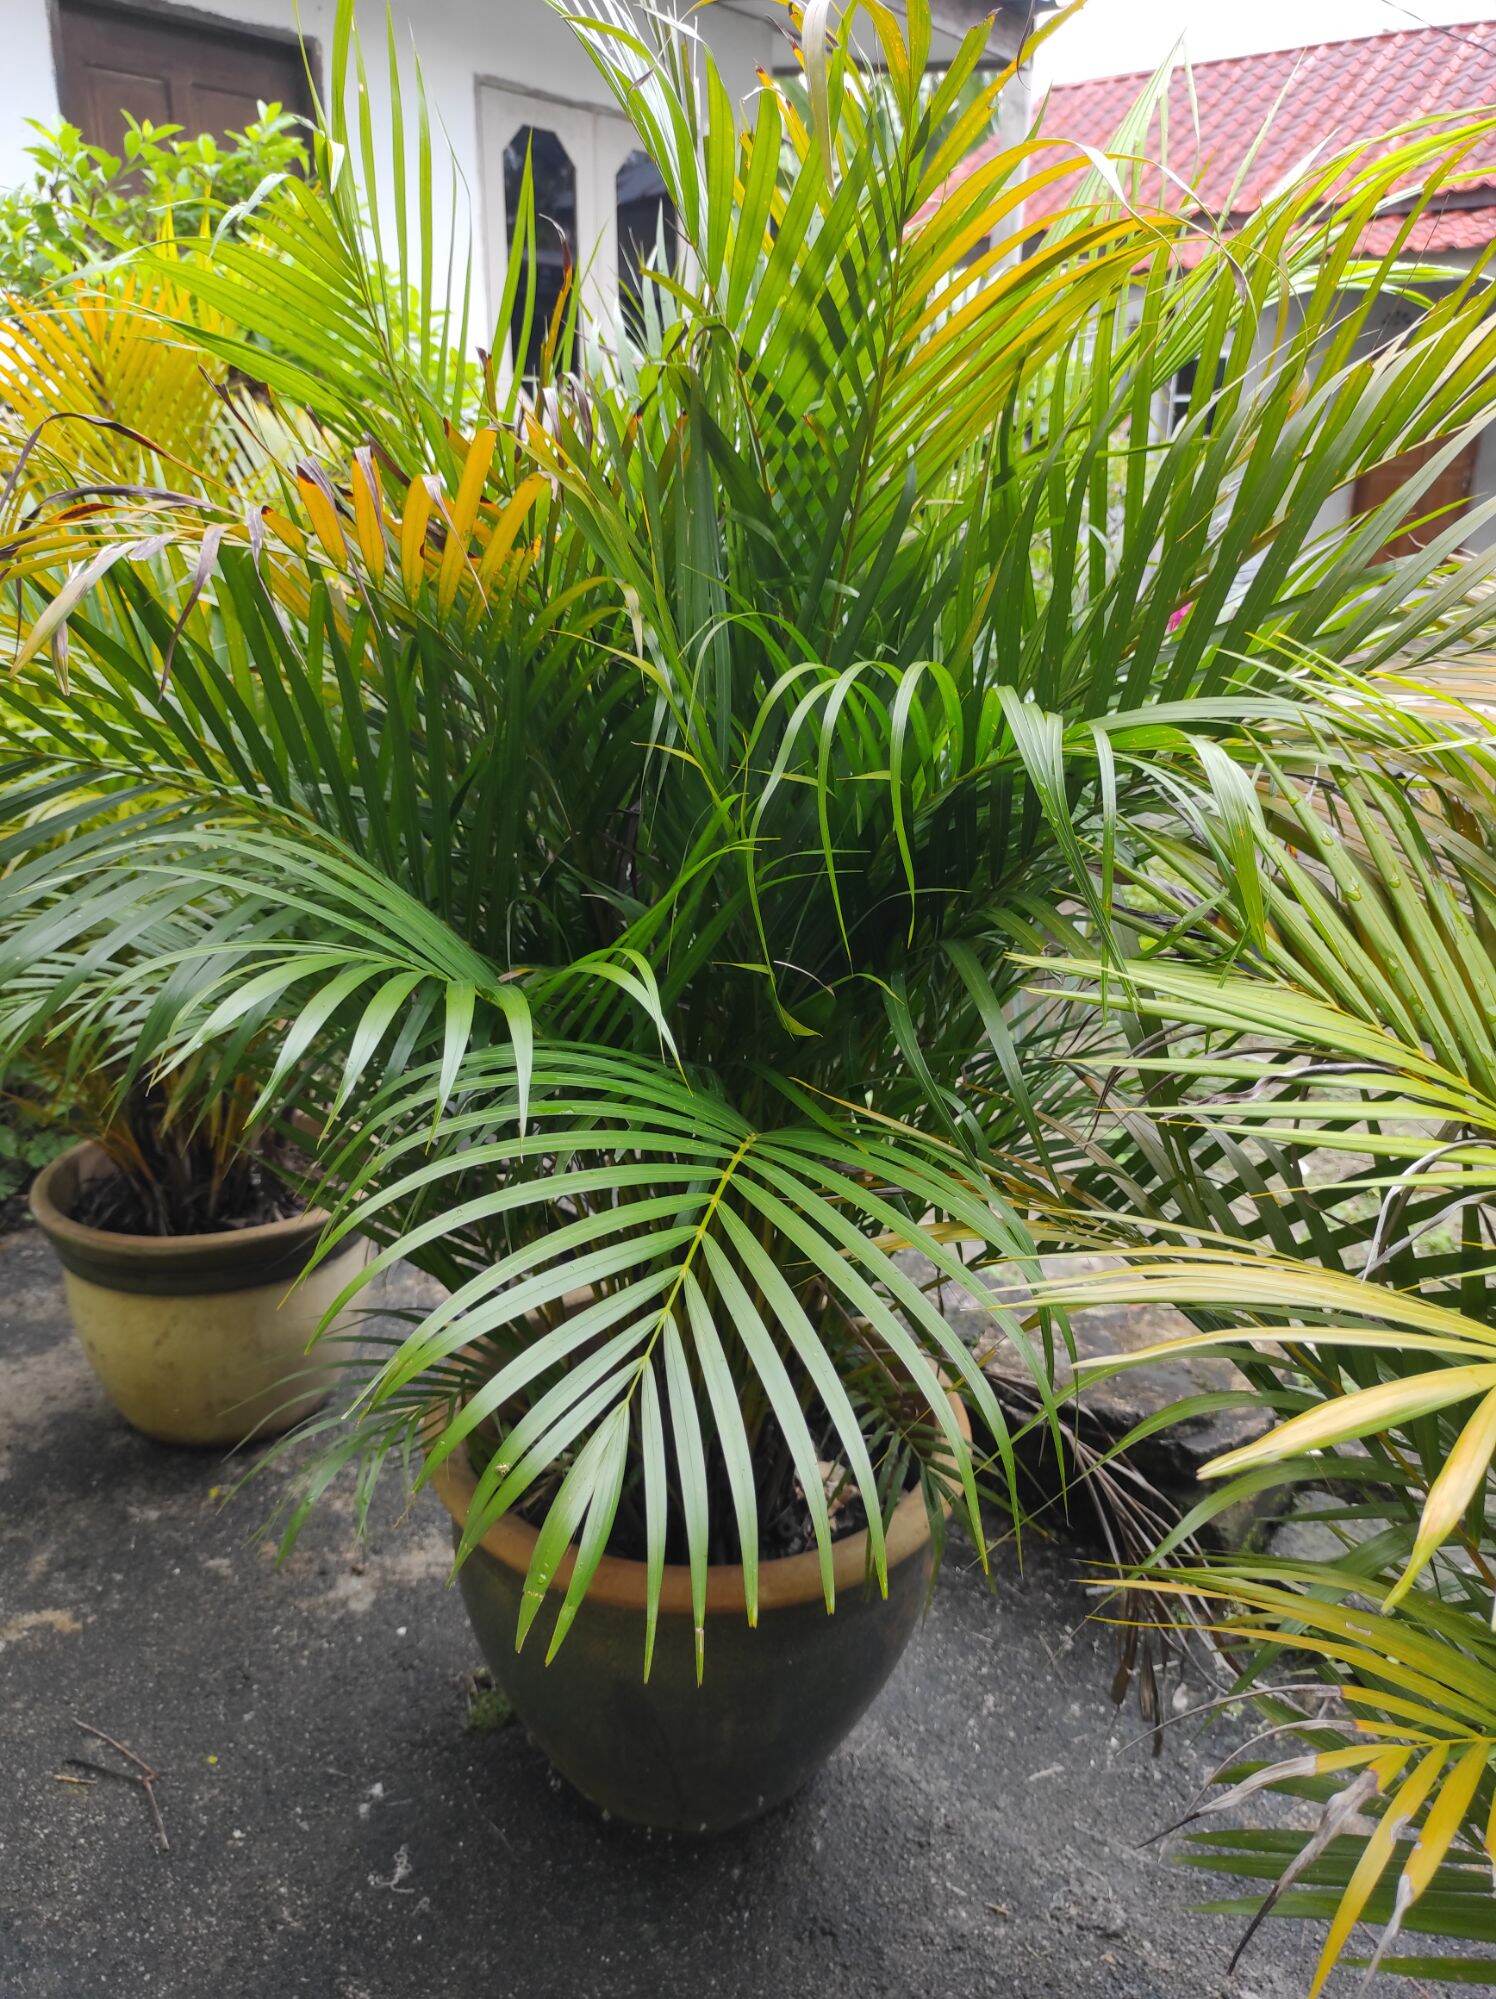 Pokok palma